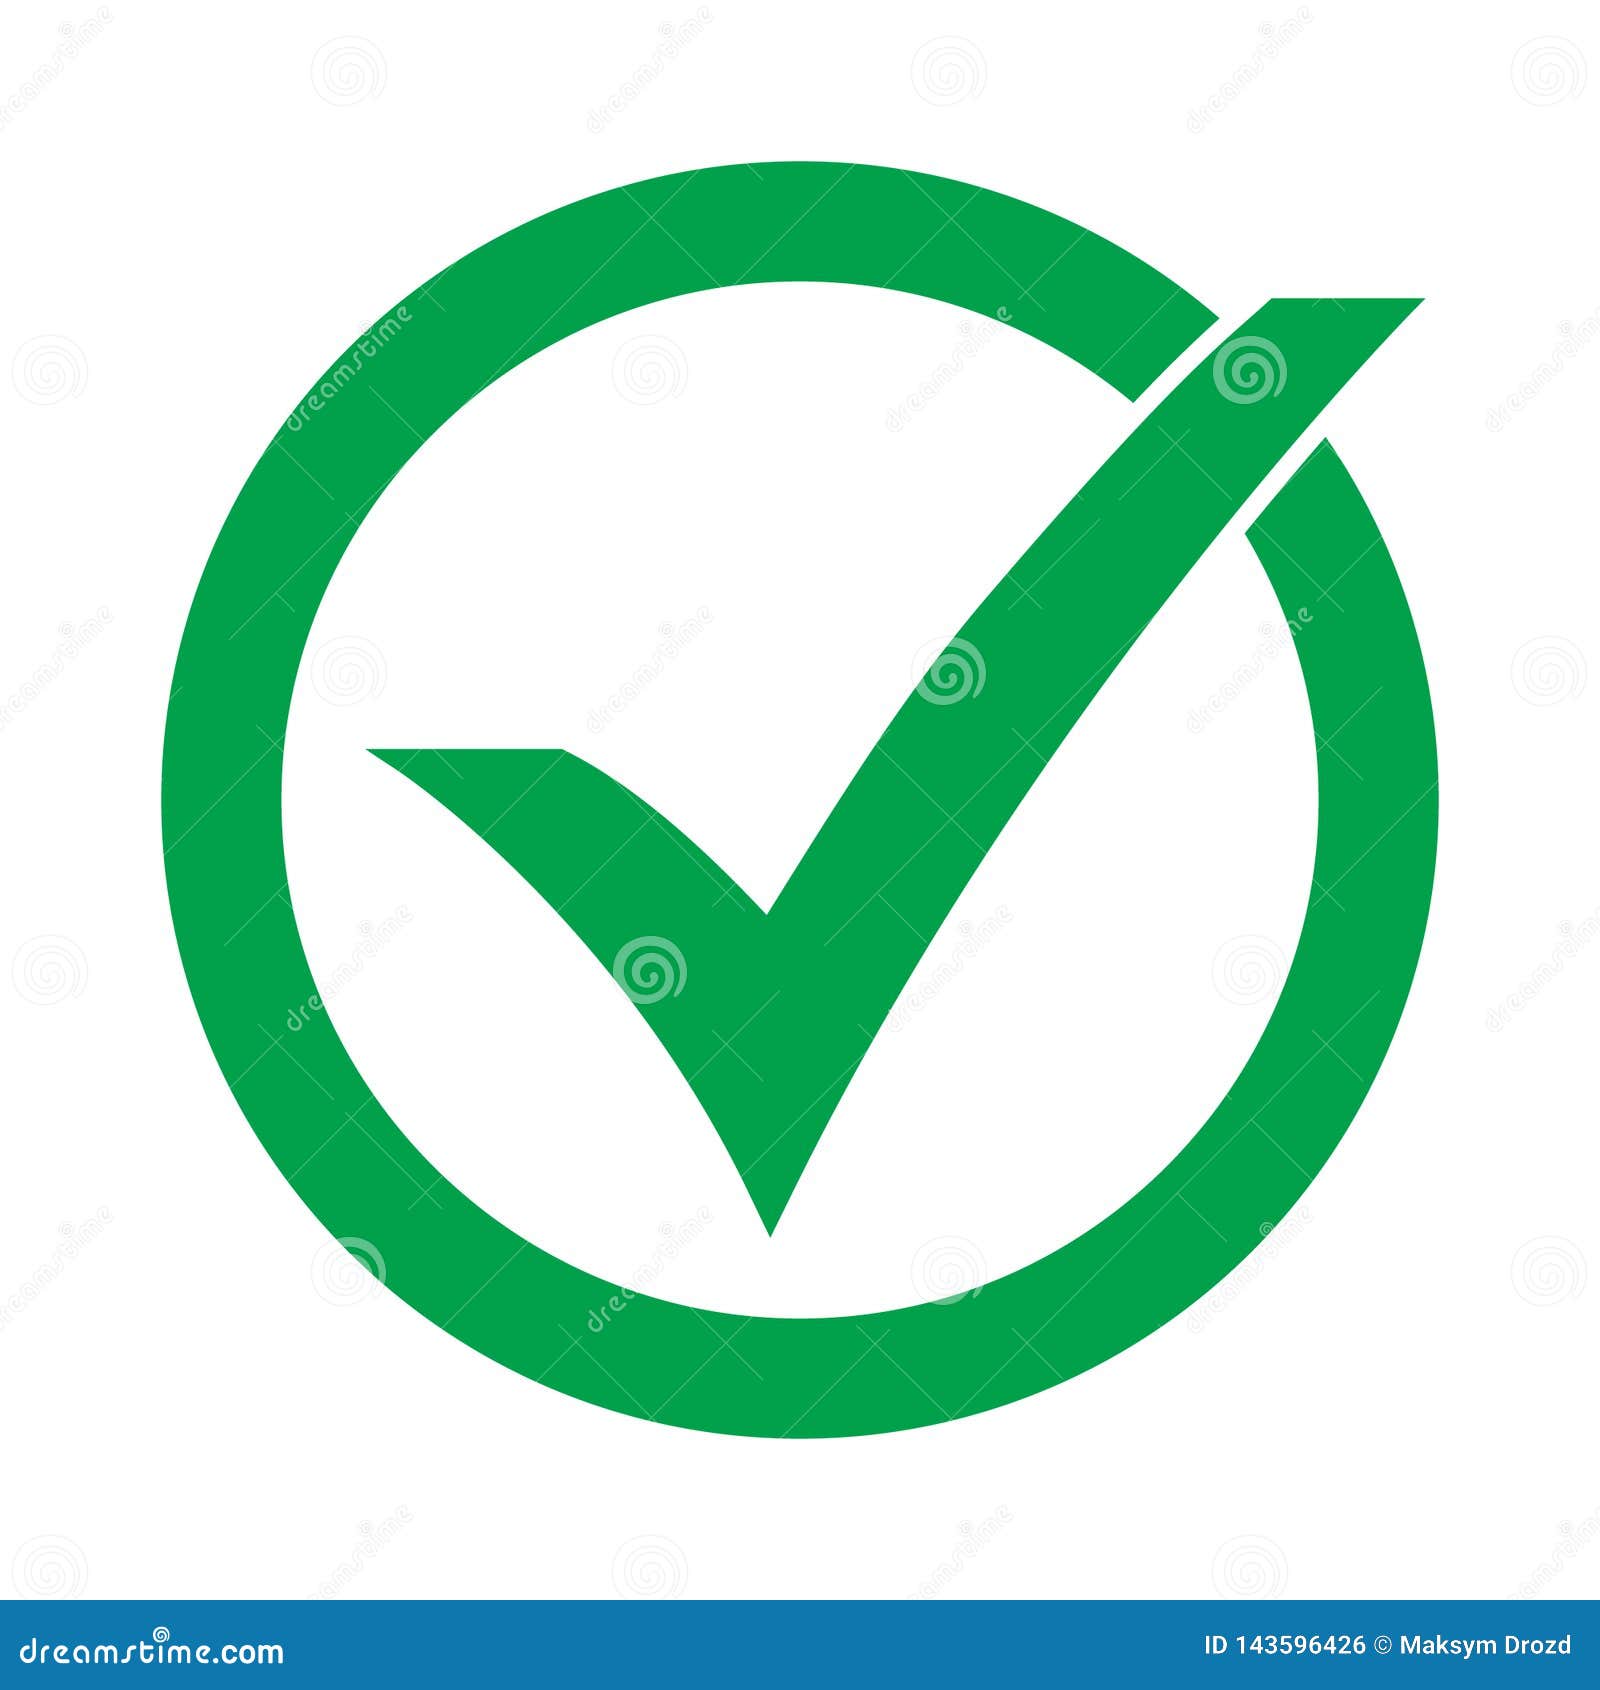 tick icon  , checkmark  on white background, checked icon or correct choice sign, check mark or checkbox picto